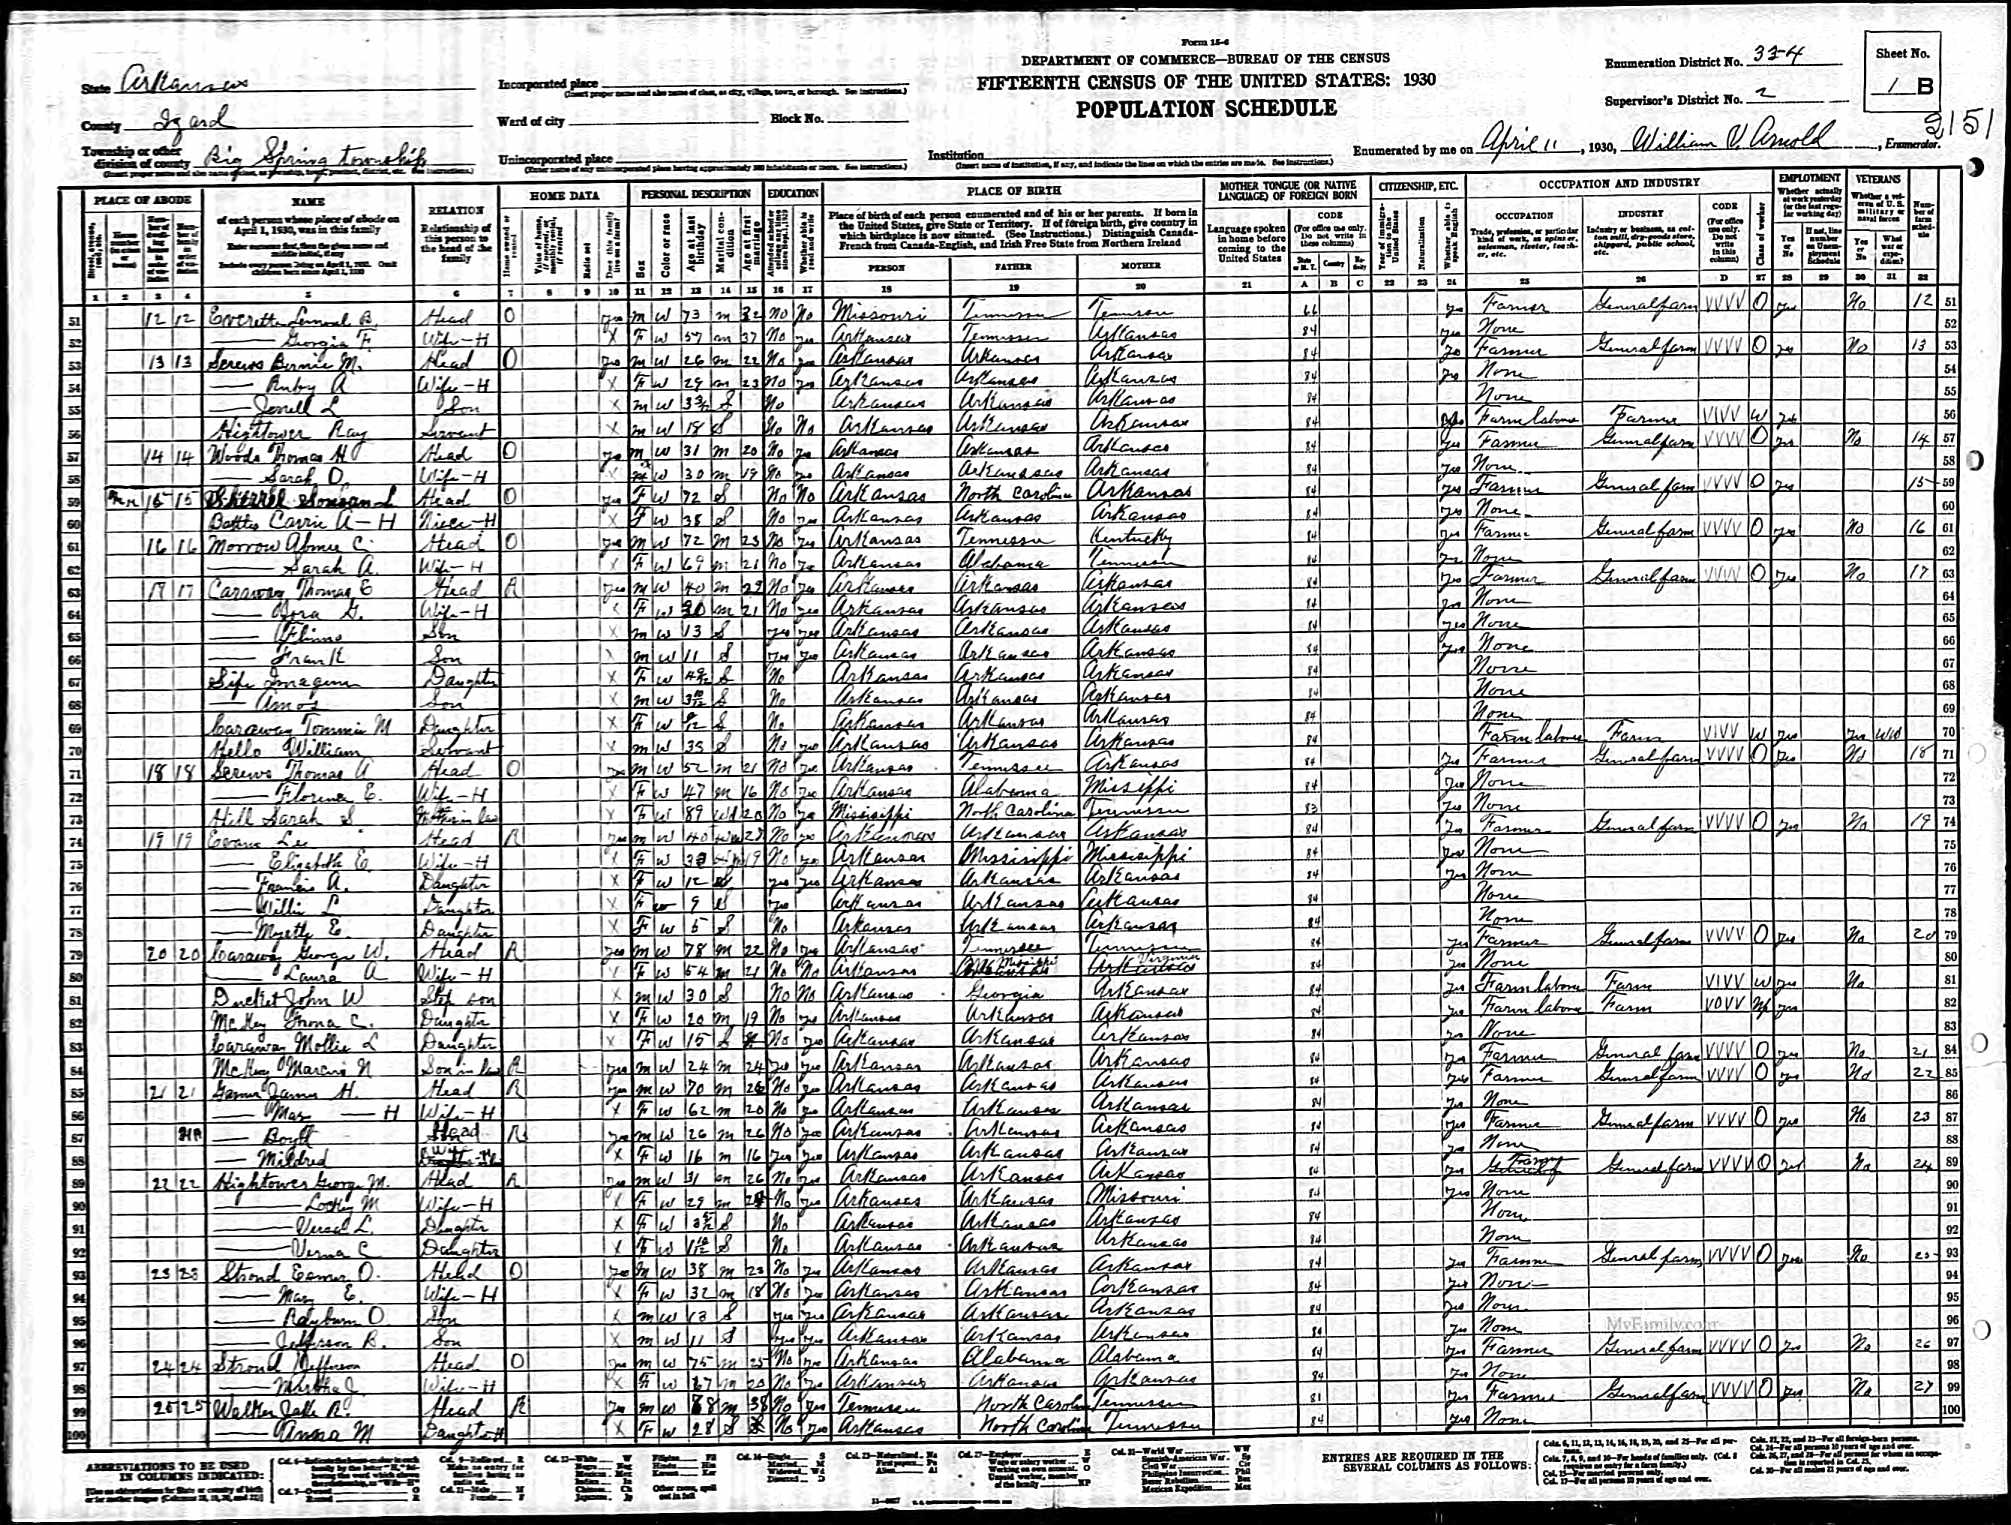 Jacob R. Walker, 1930 Izard County, Arkansas, census